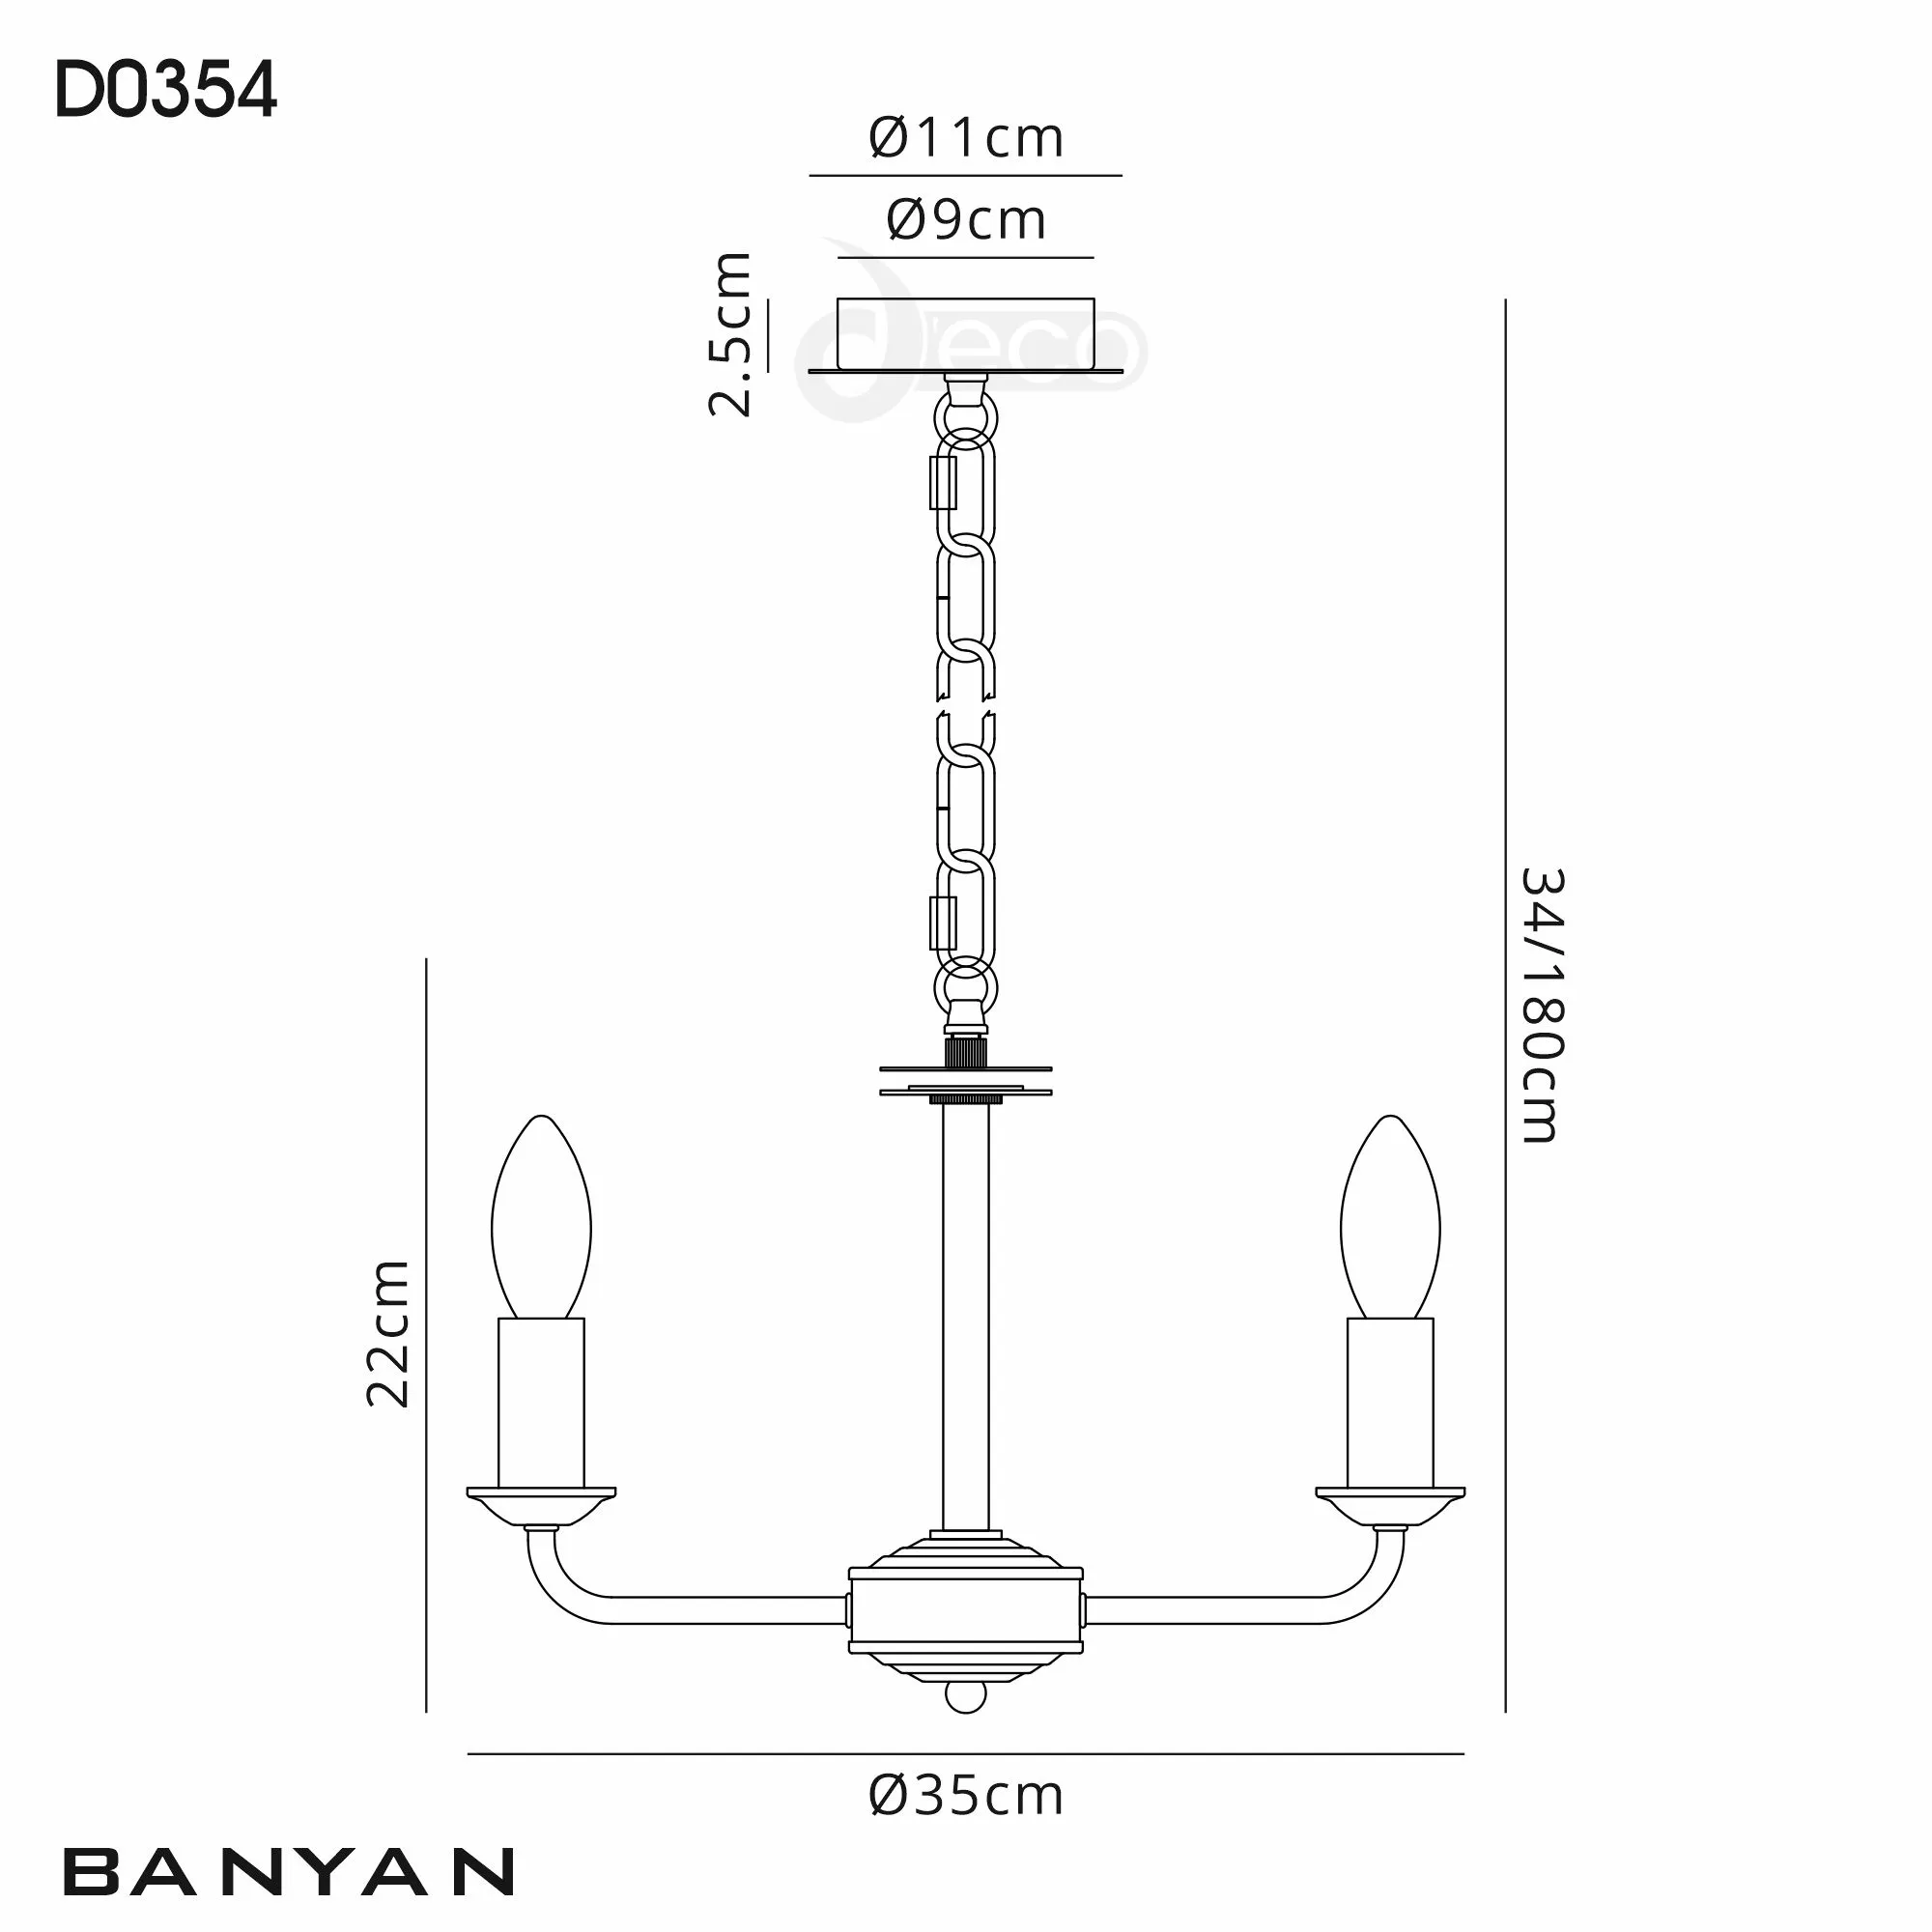 Banyan 45cm 3 Light Pendant Polished Chrome; Black DK0007  Deco Banyan CH BL